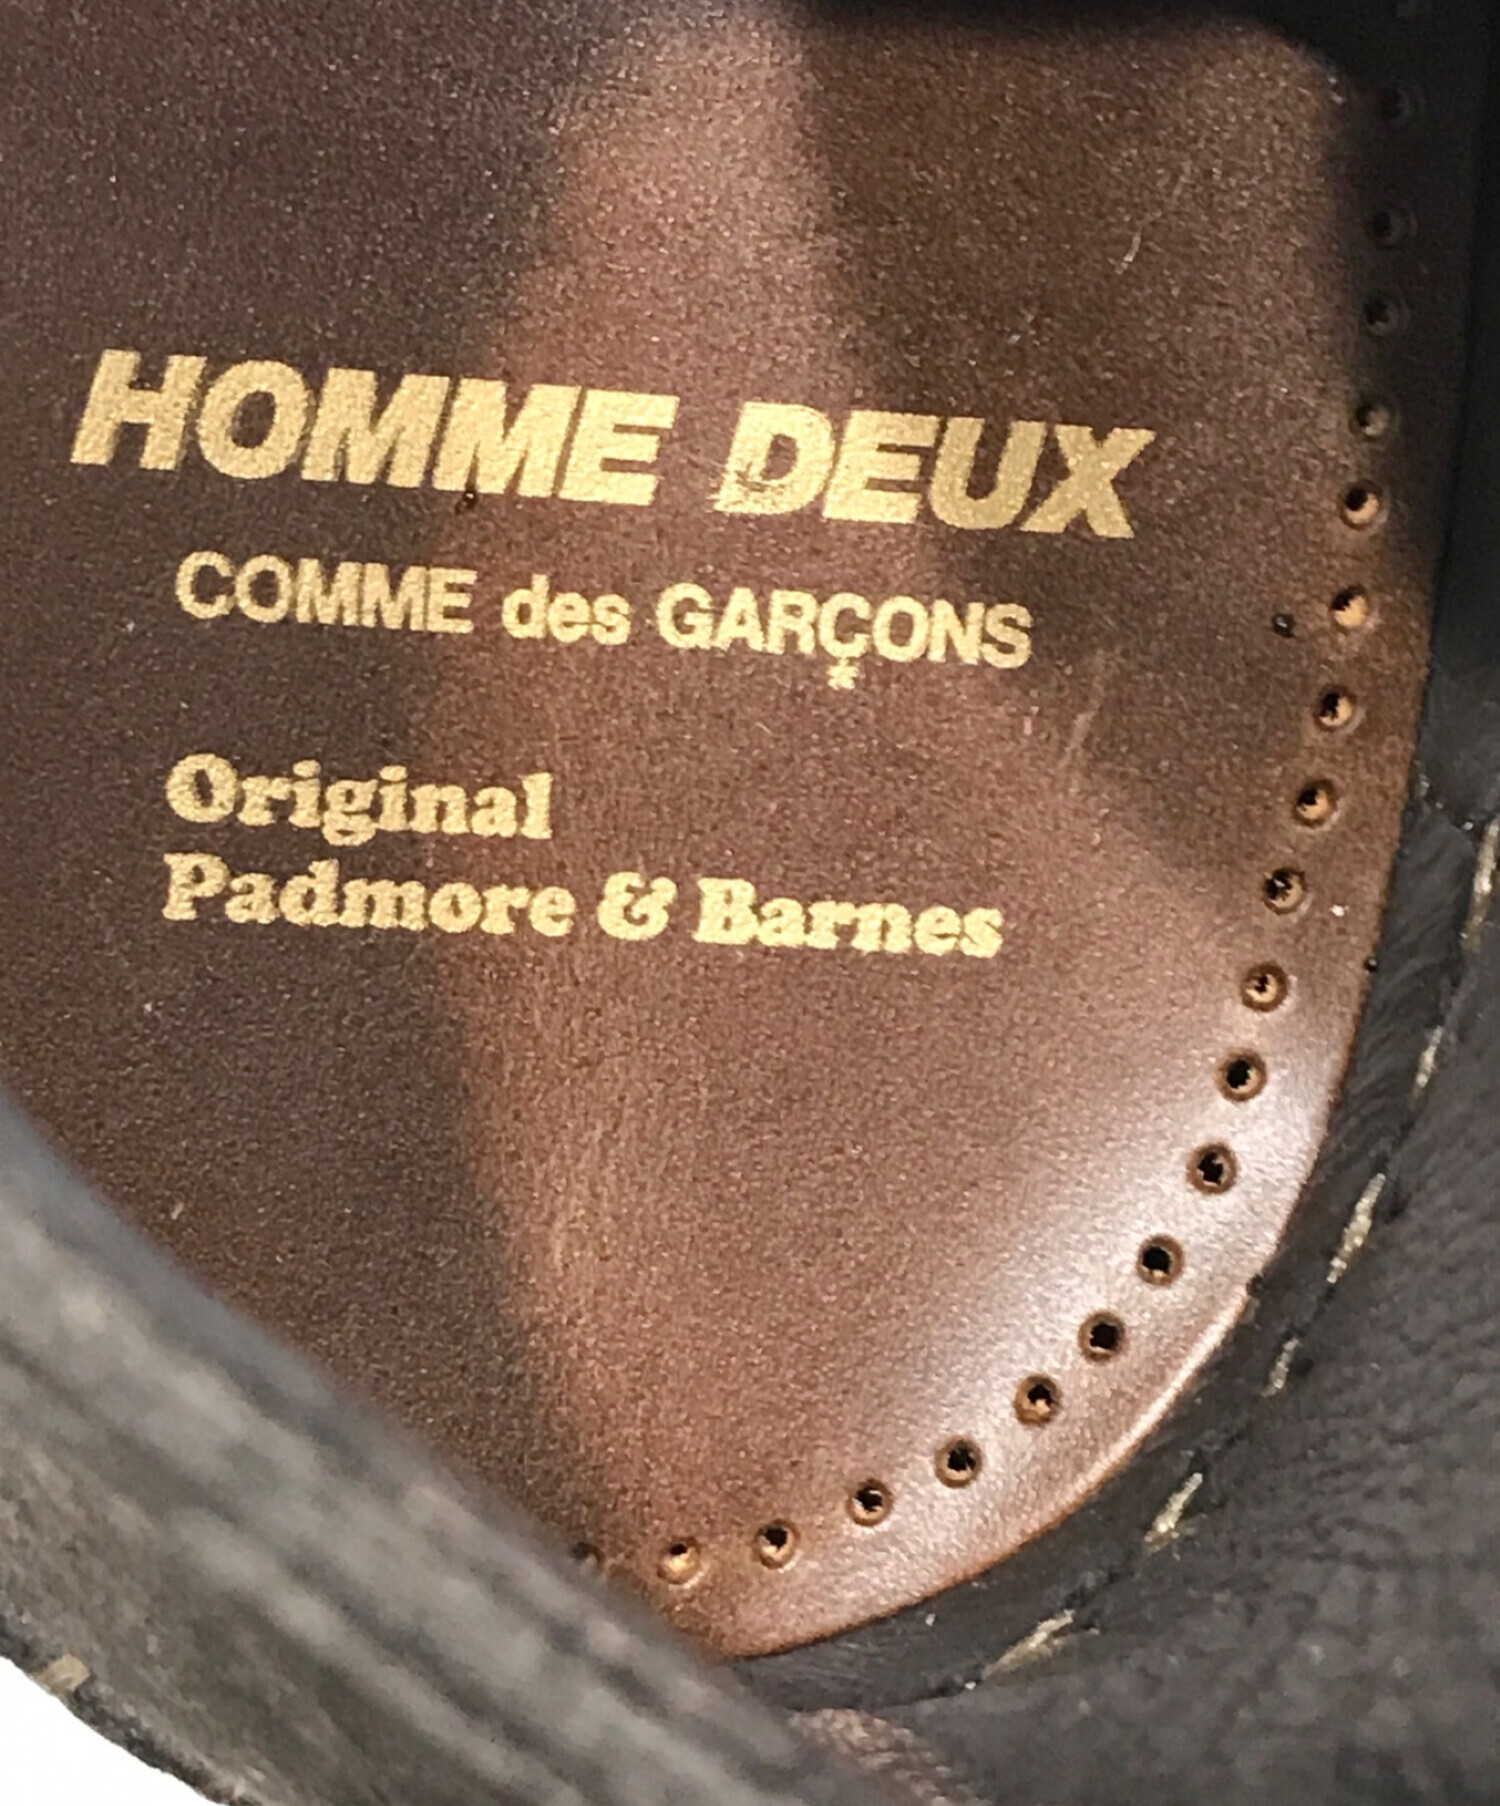 COMME des GARCONS HOMME DEUX (コムデギャルソン オム ドゥ) PADMORE&BARNES (パドモア&バーンズ)  クレープソールブーツ ブラウン サイズ:SIZE 7